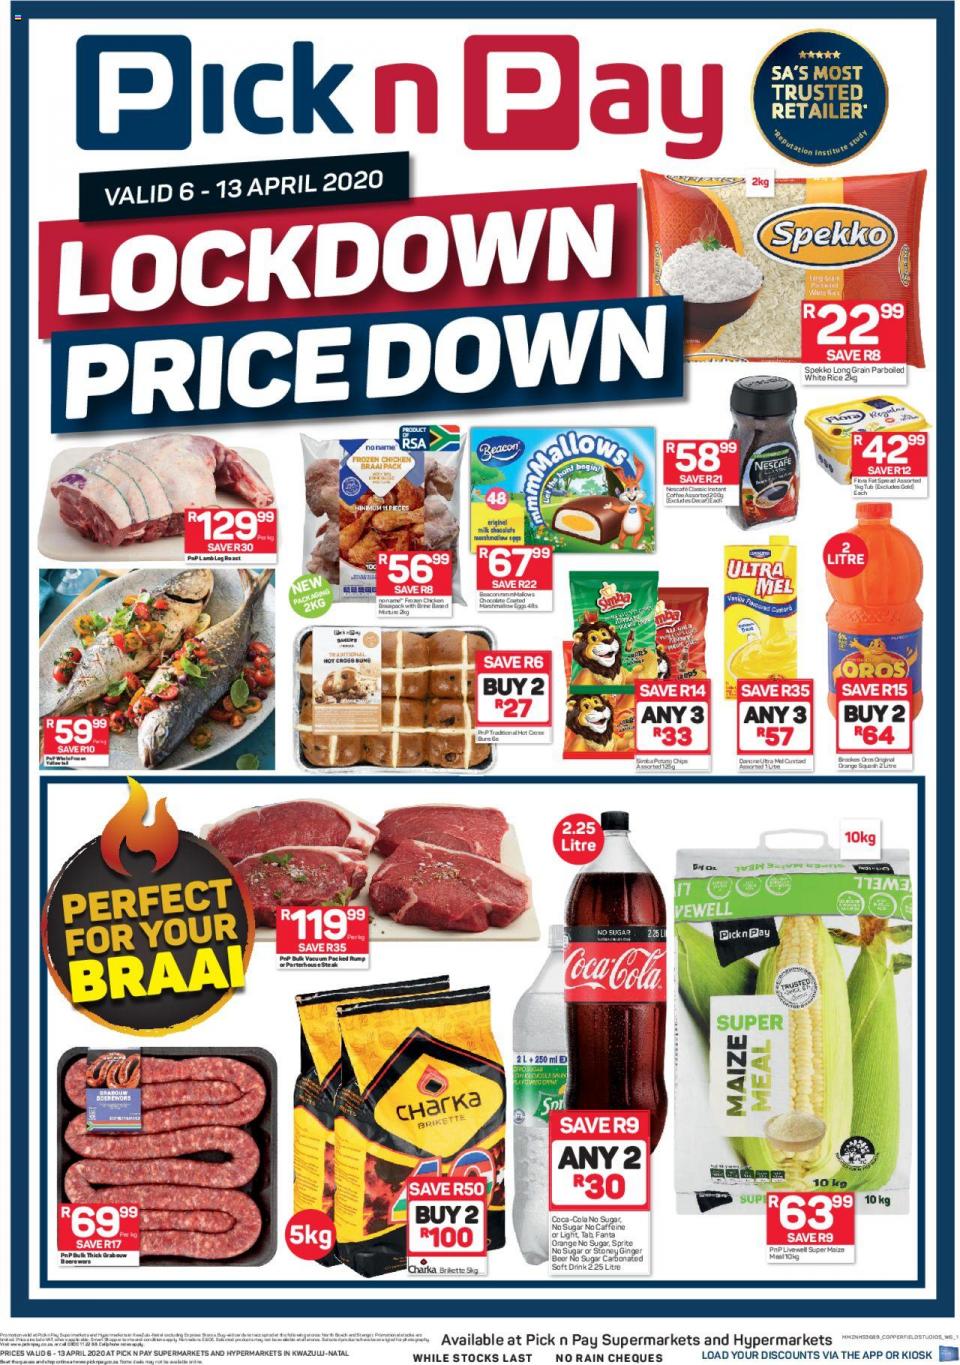 Pick n Pay Specials Lockdown Pricedown 06 April 2020